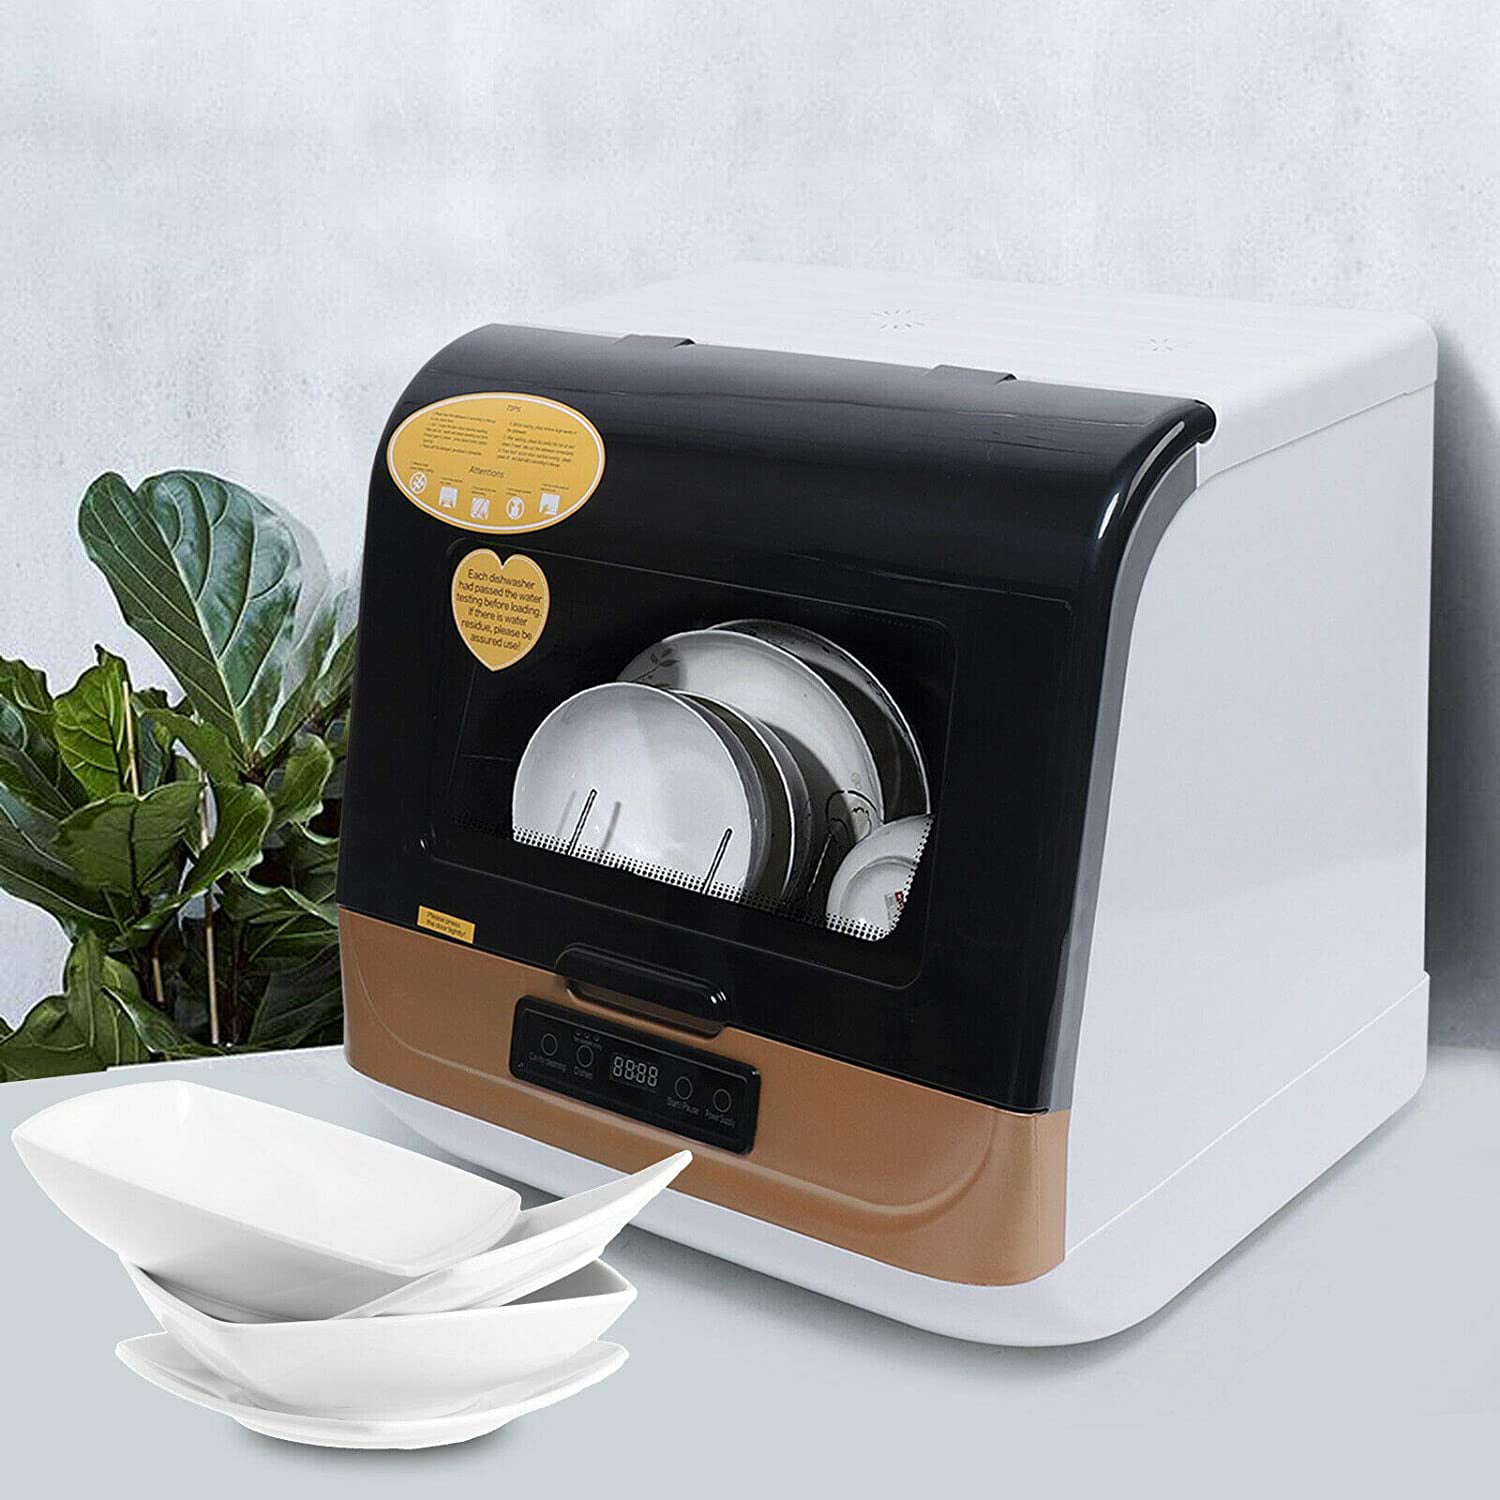 TFCFL Portable Countertop Dishwasher 4 Washing Programs 1200W Dish Washer Automatic - 2